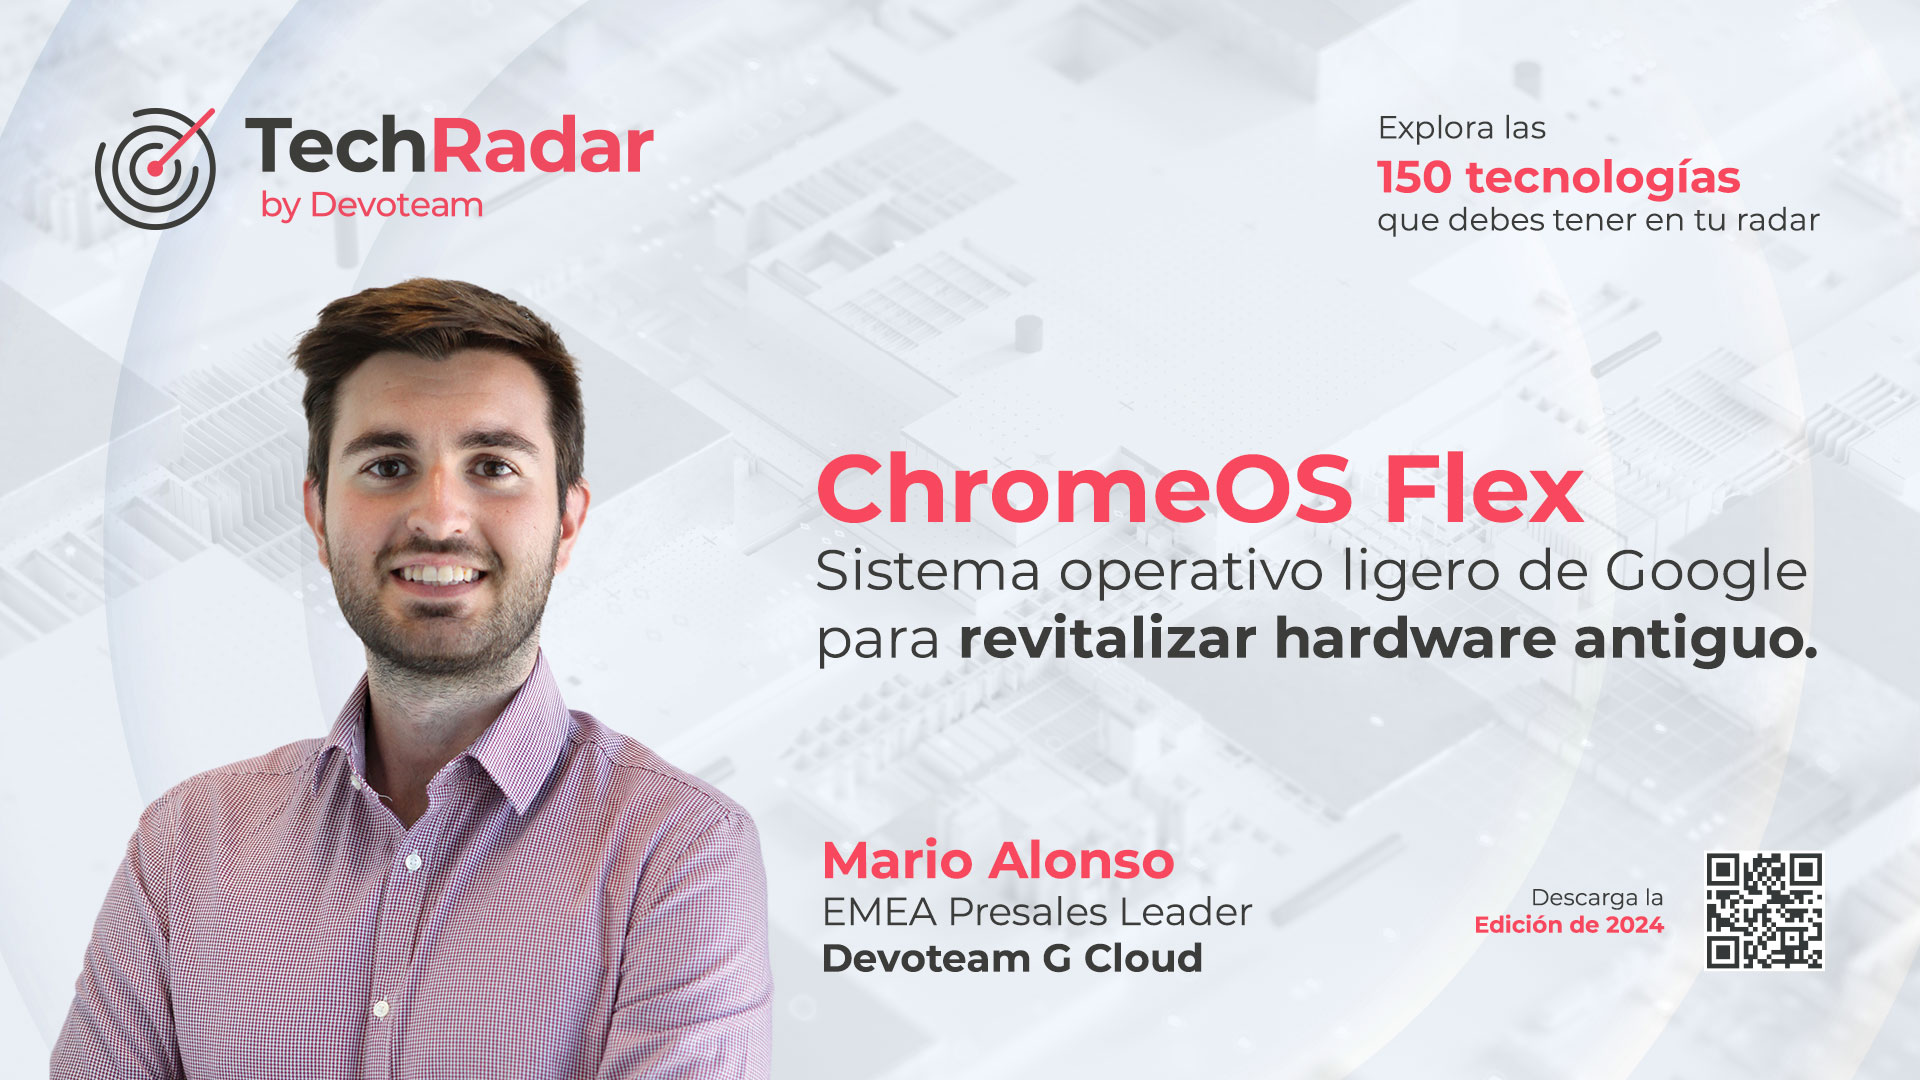 Mario Alonso experto del TechRadar by Devoteam 2024 | ChromeOs Flex